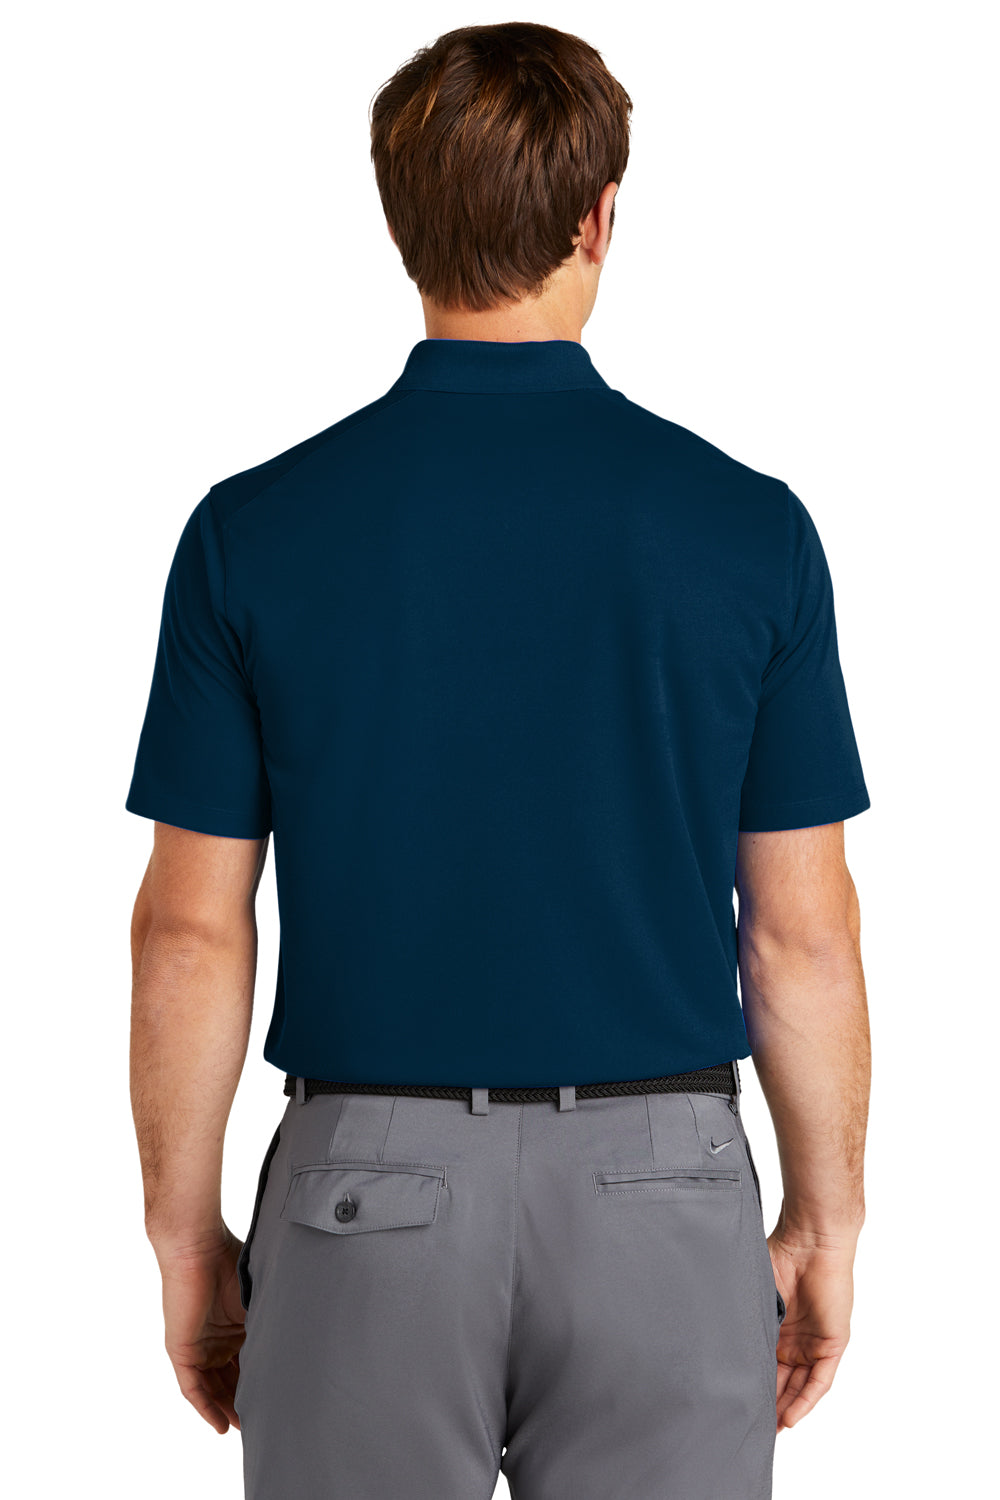 Nike NKDC2103 Mens Dri-Fit Moisture Wicking Micro Pique 2.0 Short Sleeve Polo Shirt w/ Pocket Navy Blue Model Back